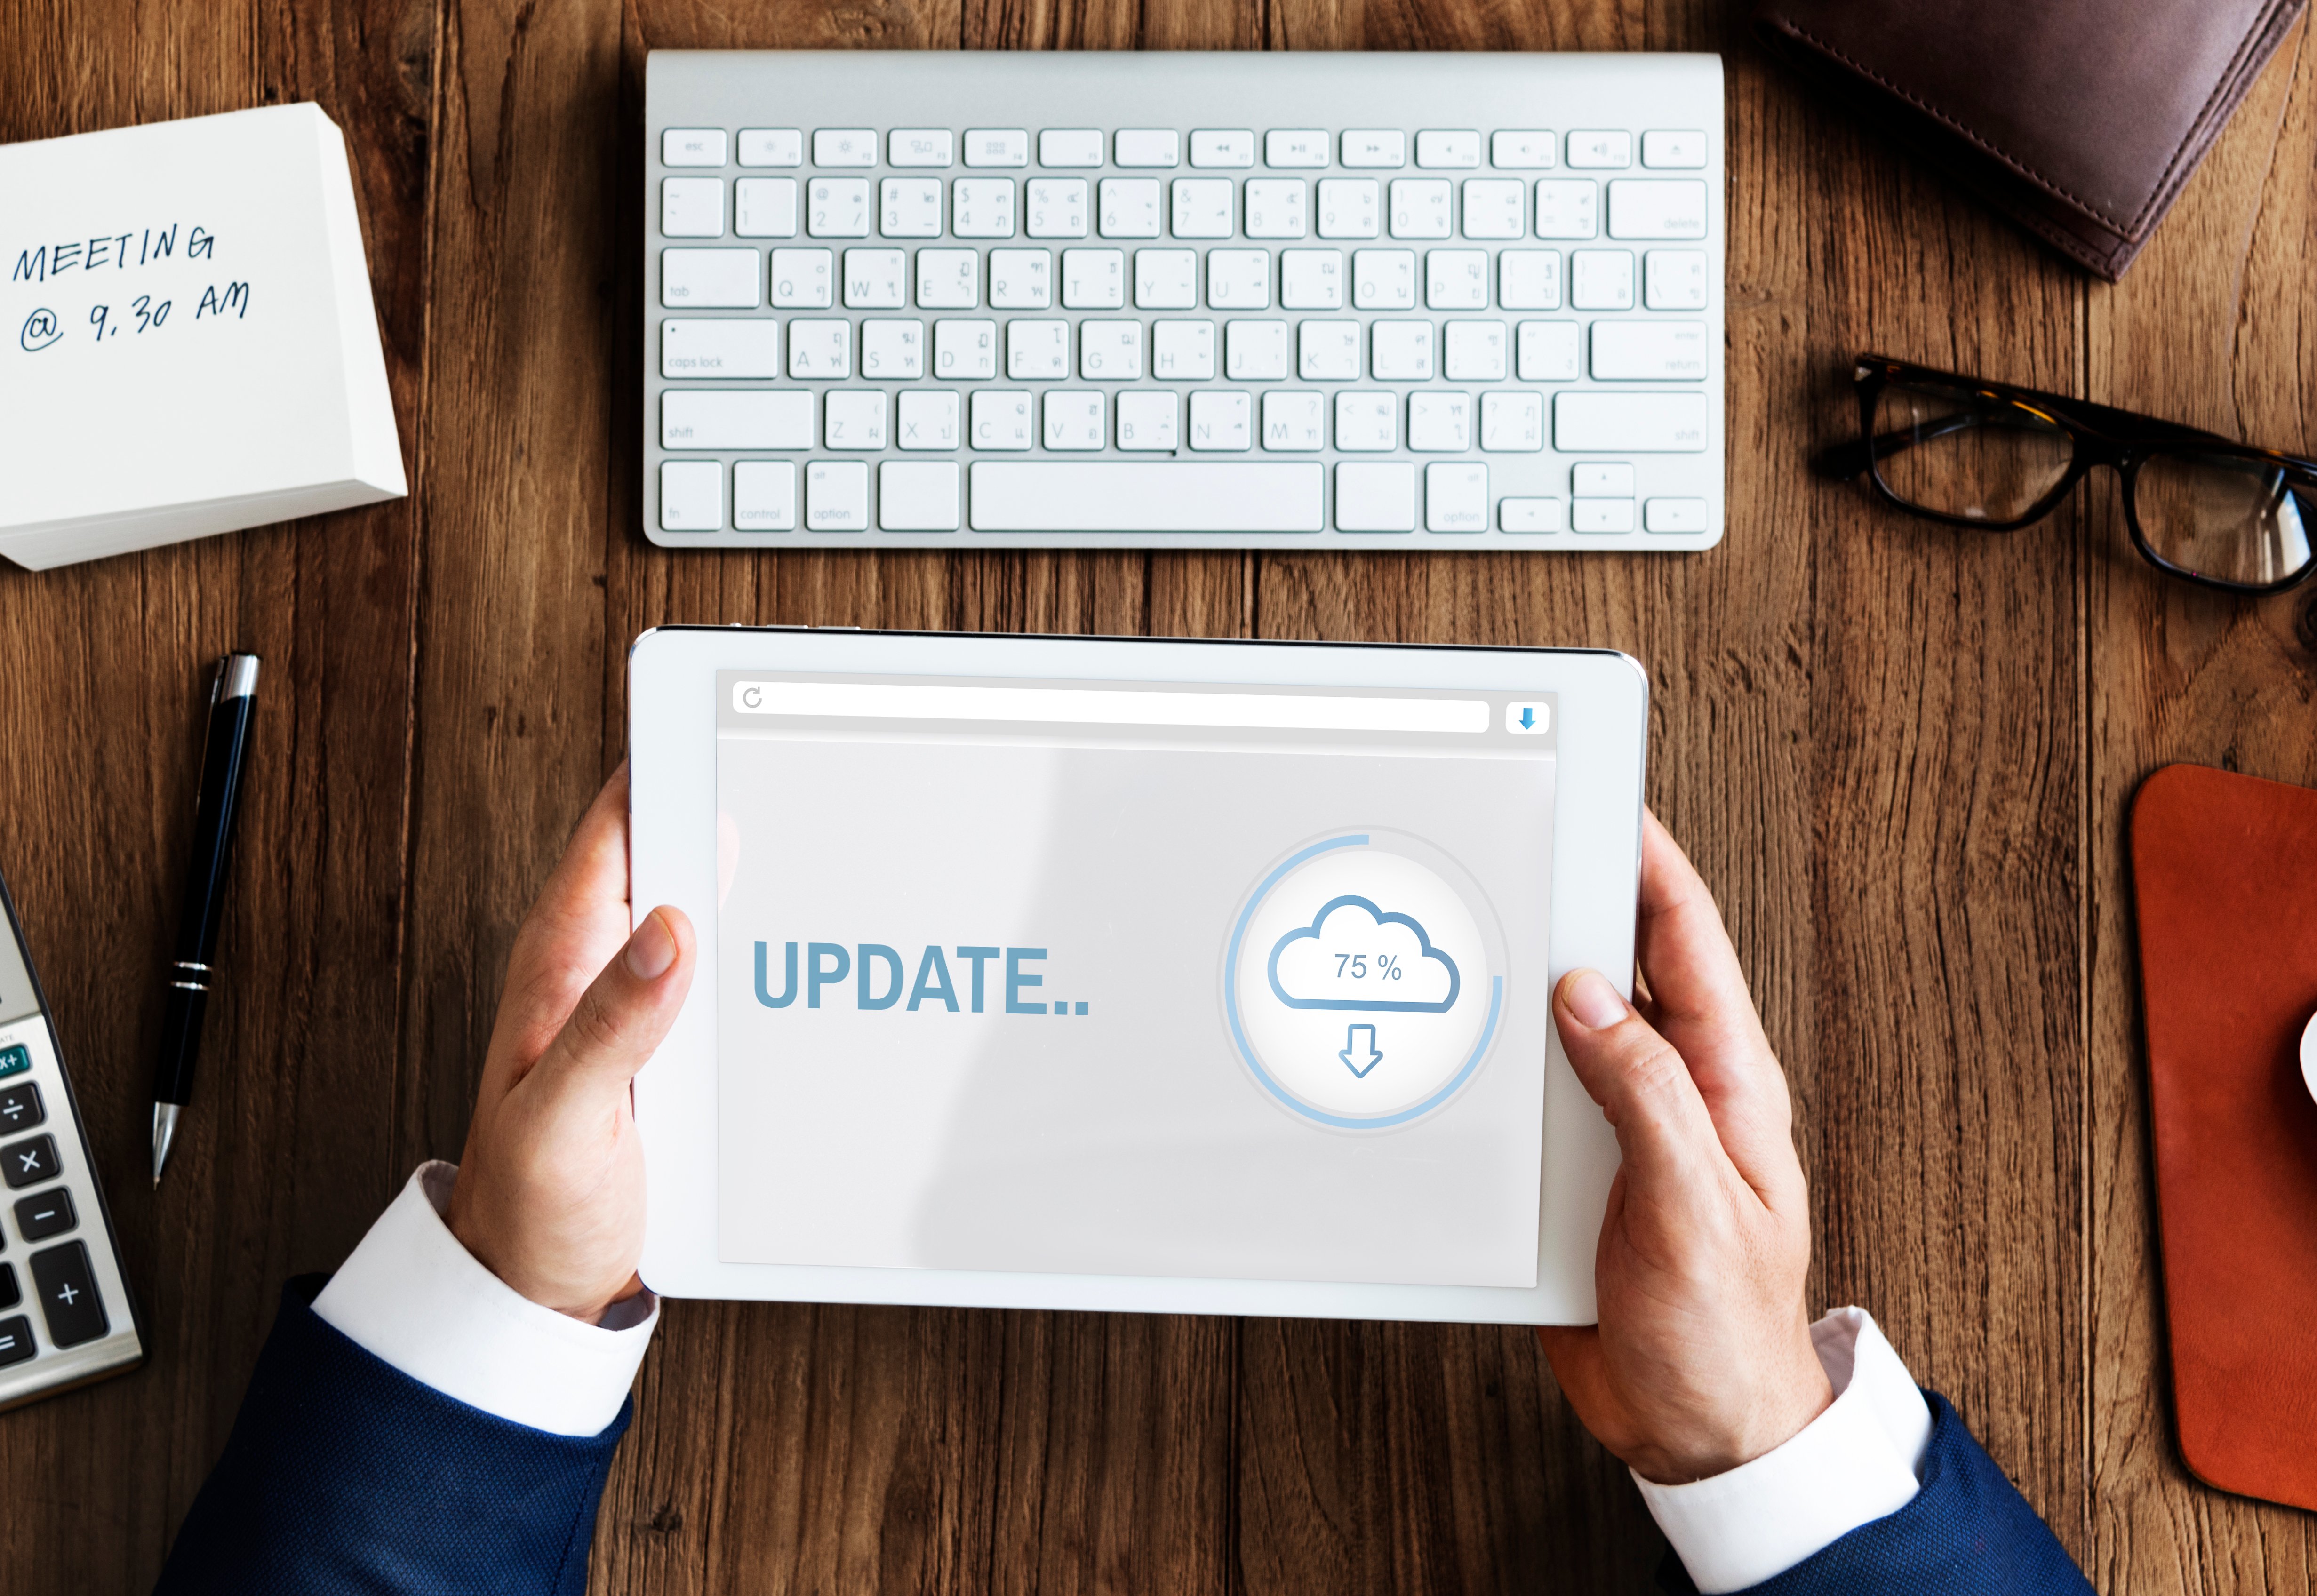 update-cloud-storage-data-information-concept-2021-08-26-23-58-30-utc